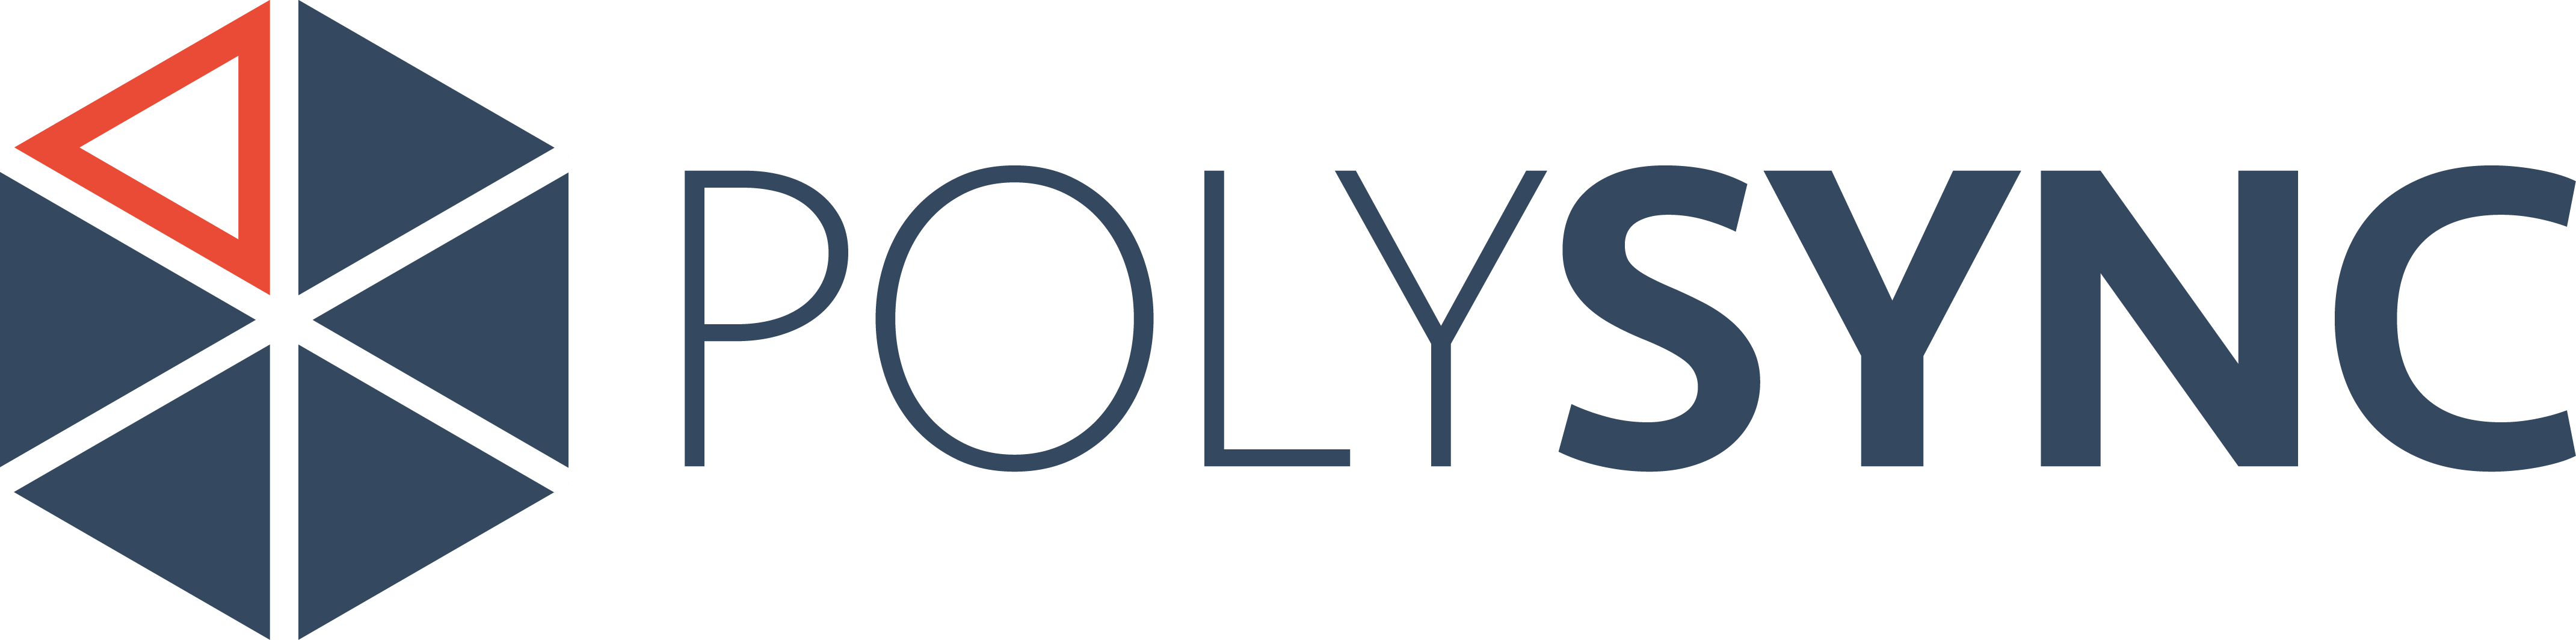 polysync.png